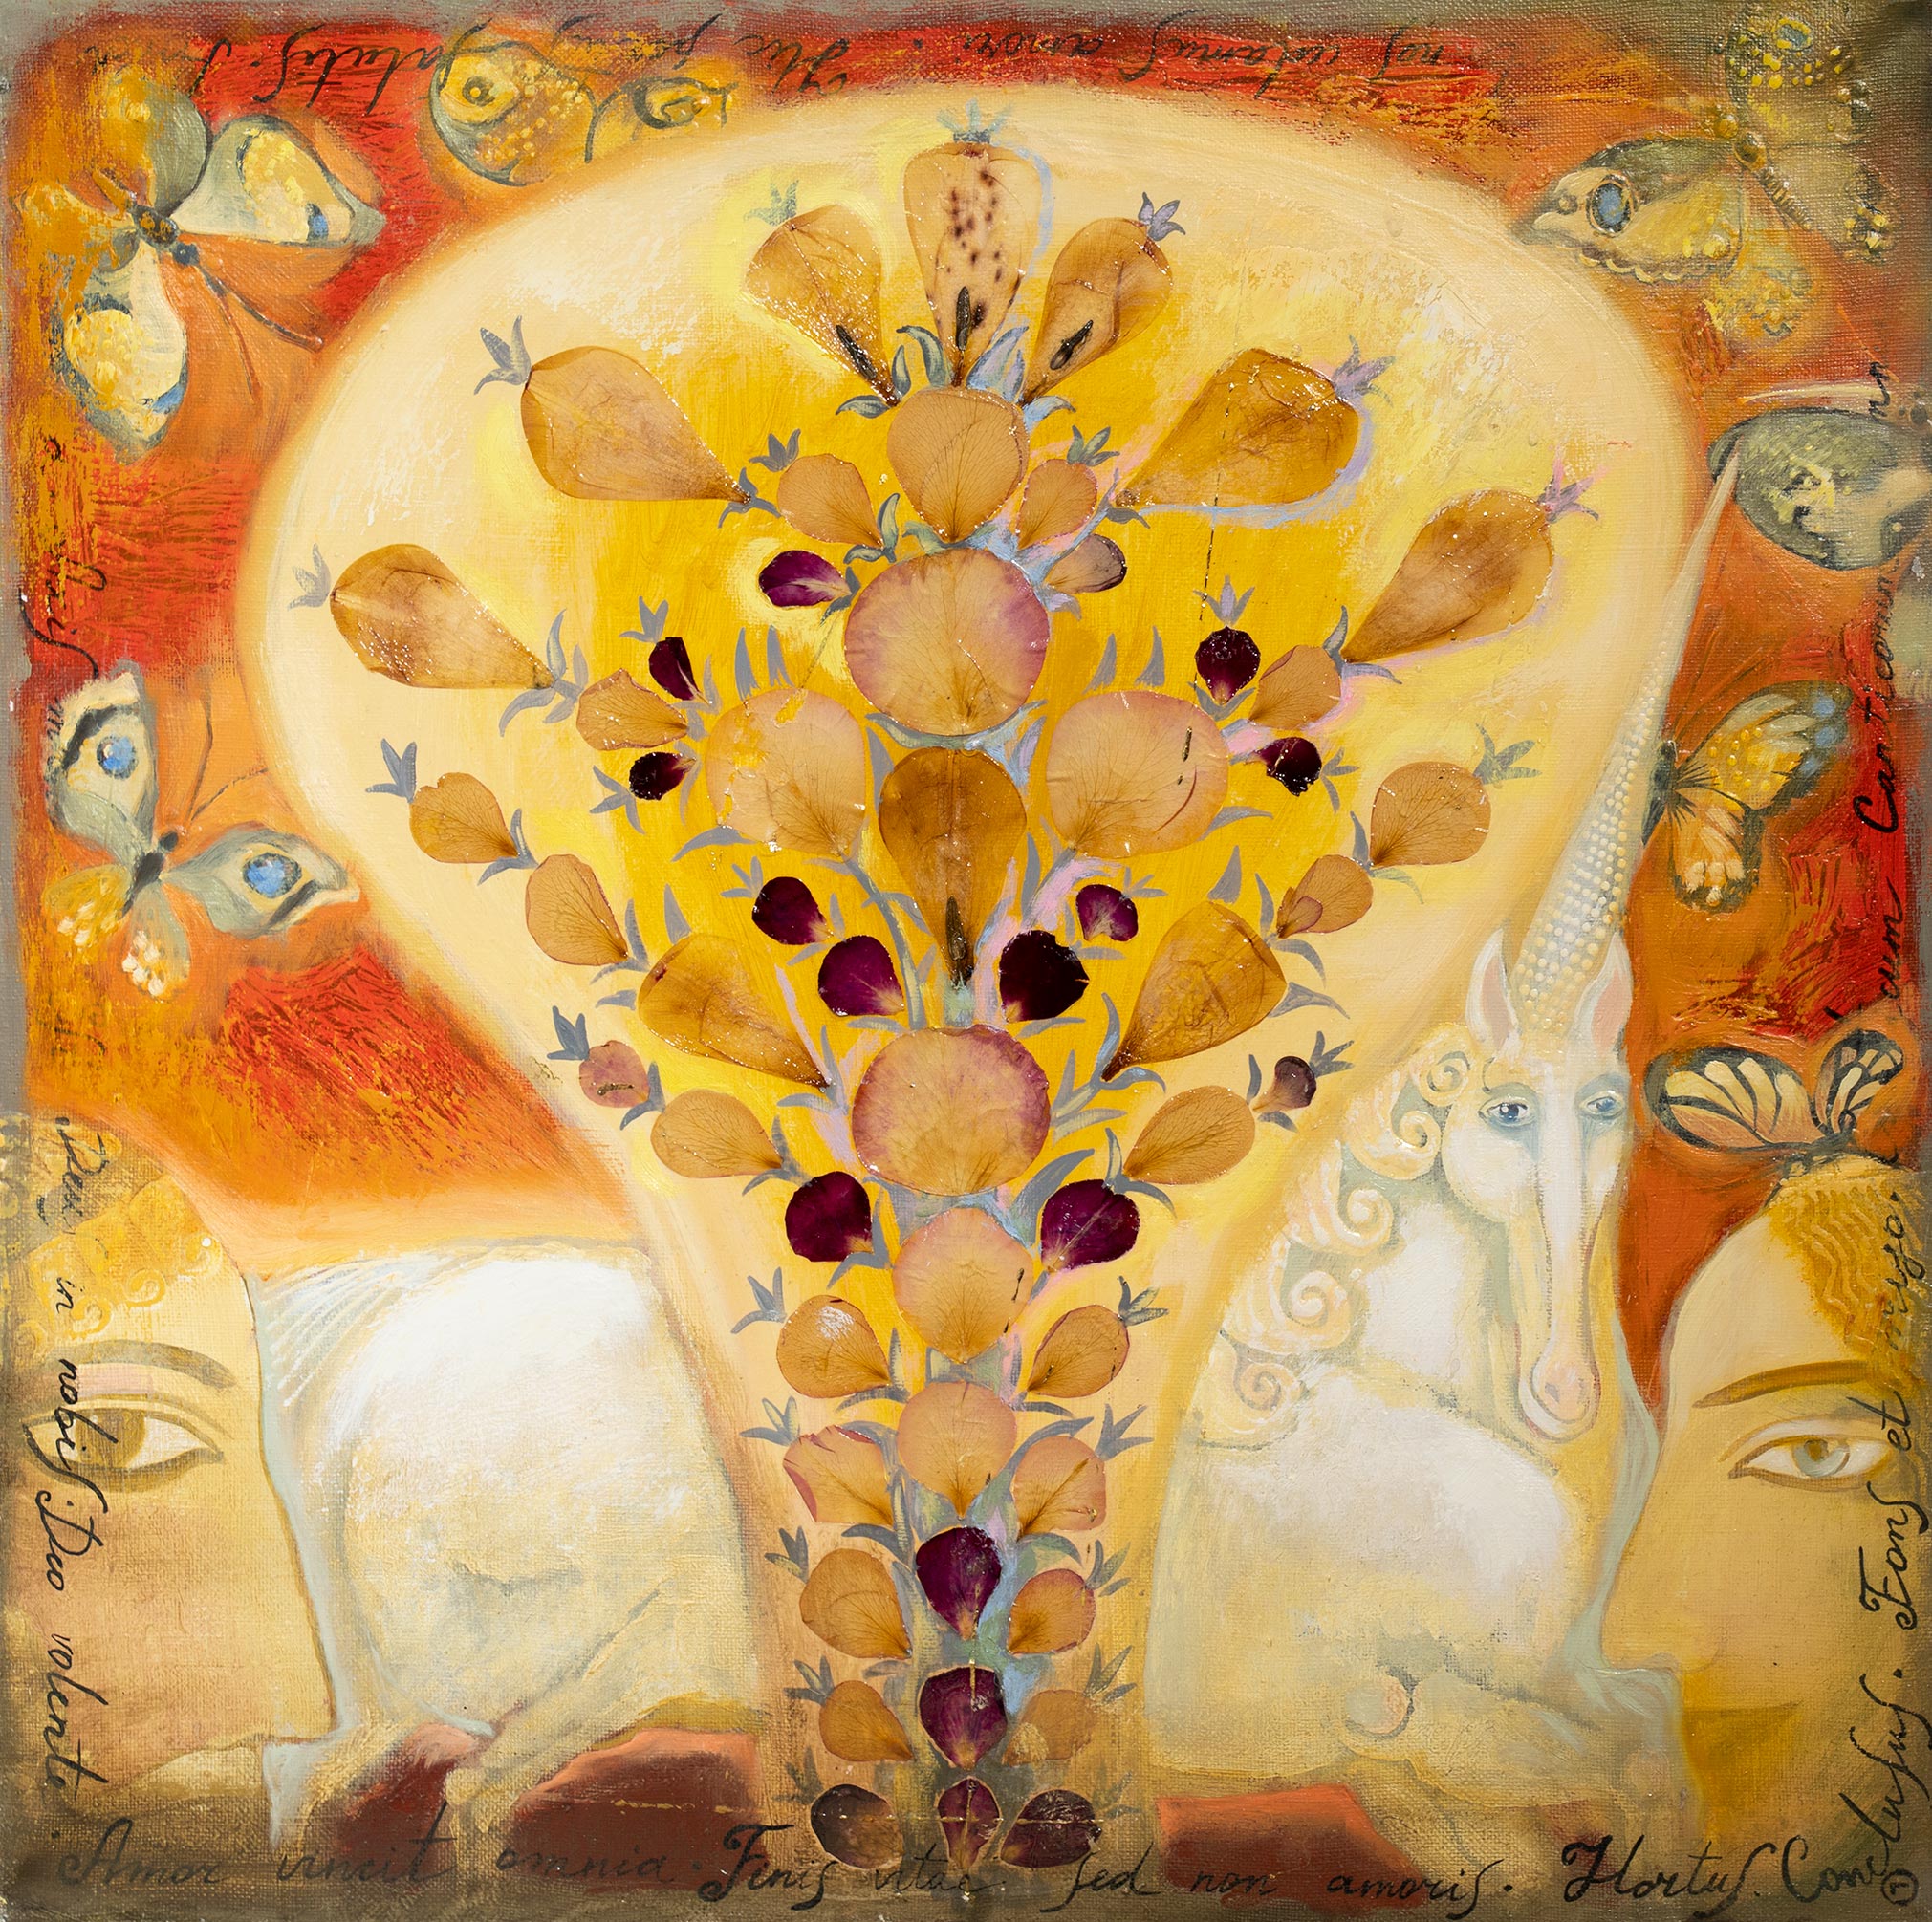 Tree of Life - 1, Olga Gasparyan, Buy the painting Mixed media